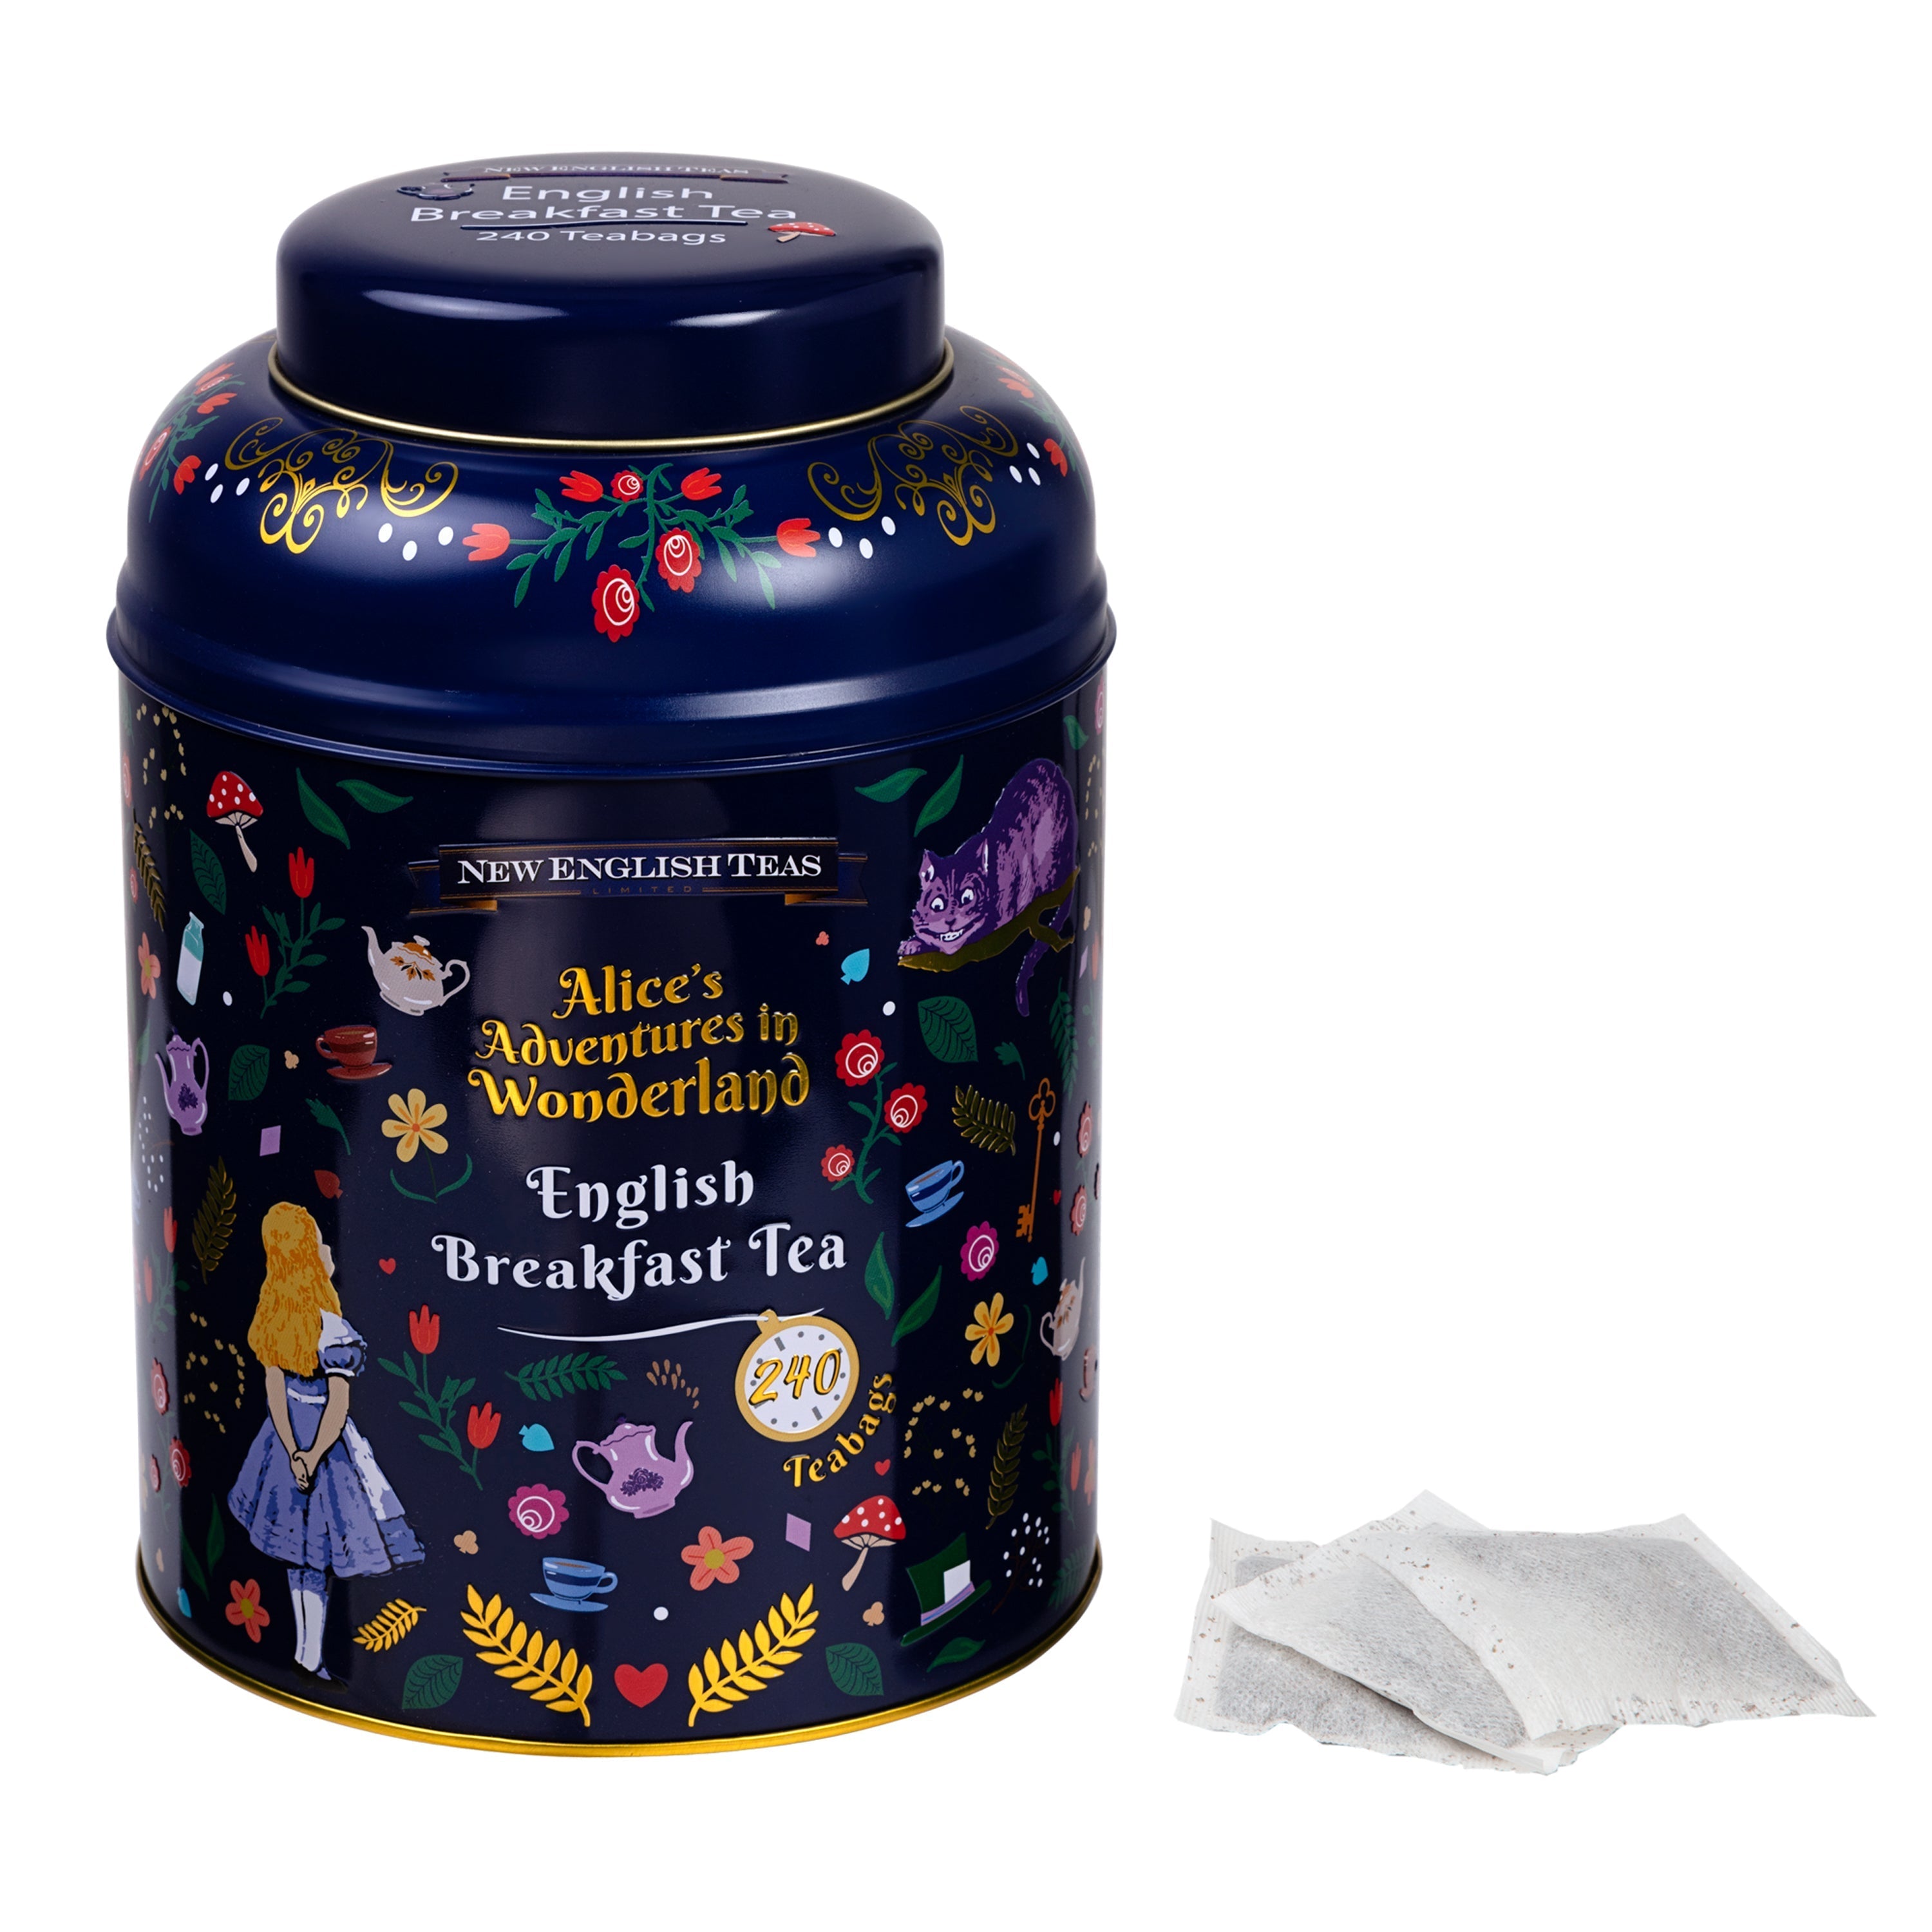 Midnight Alice in Wonderland Tea Caddy with 240 English Breakfast Teabags New English Teas 